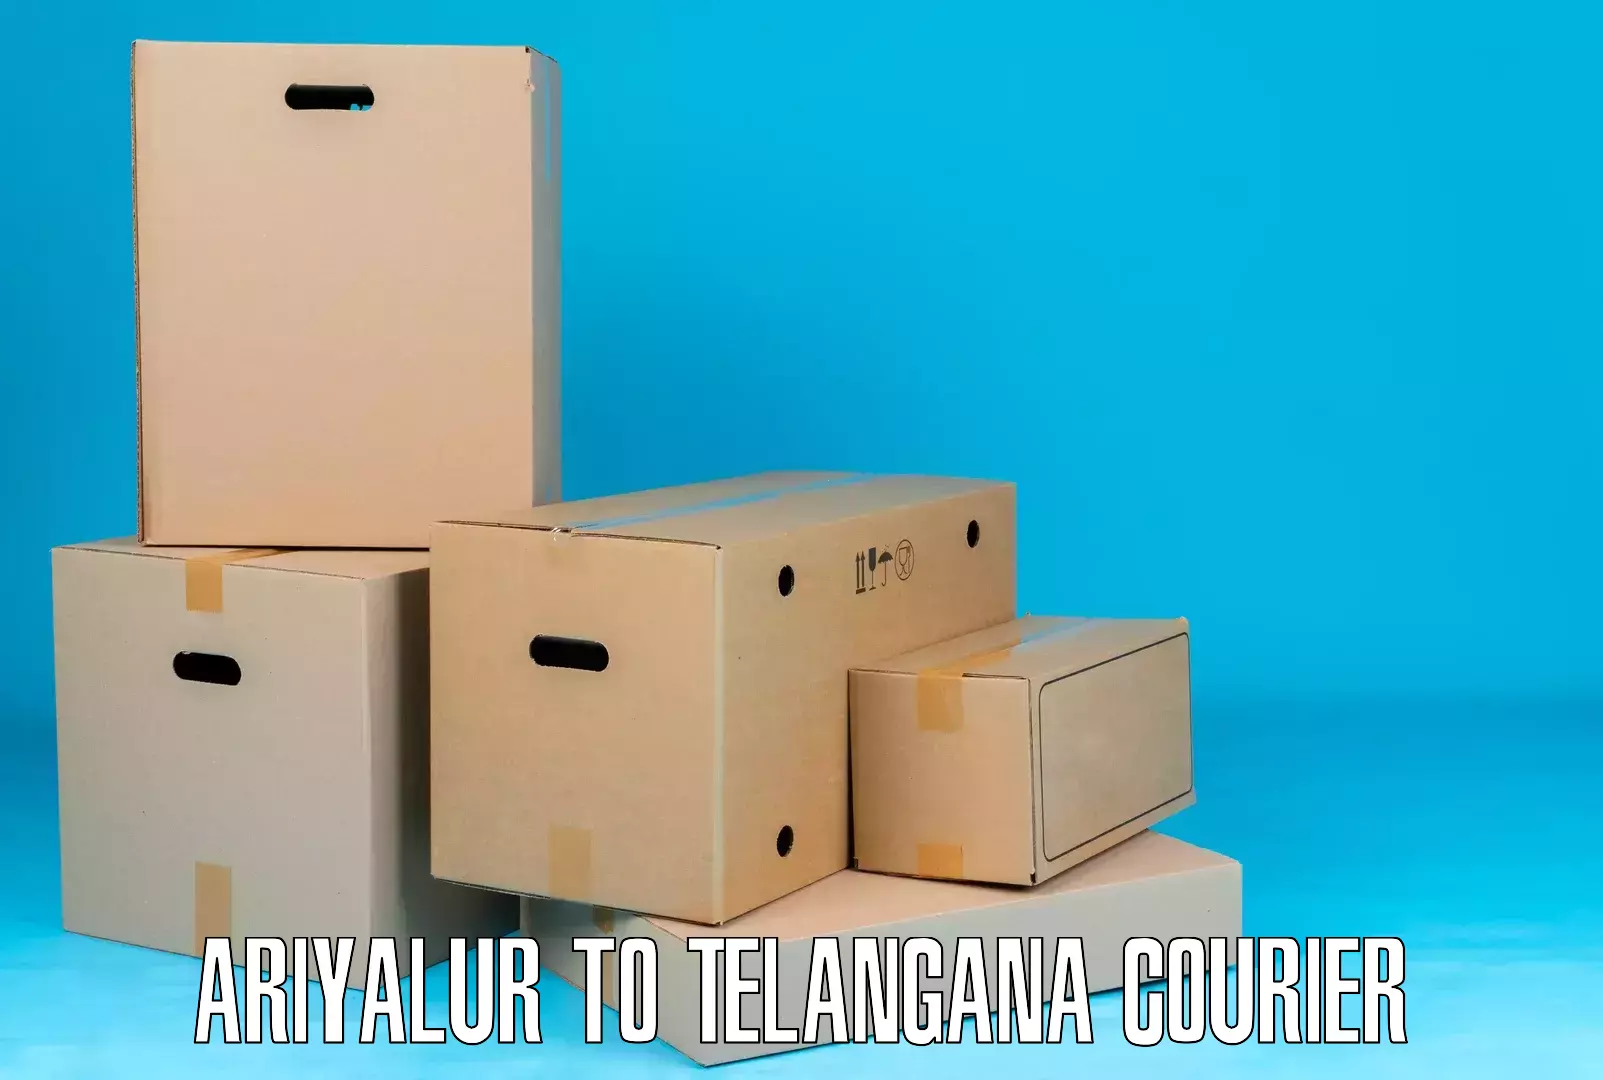 Supply chain efficiency Ariyalur to Secunderabad